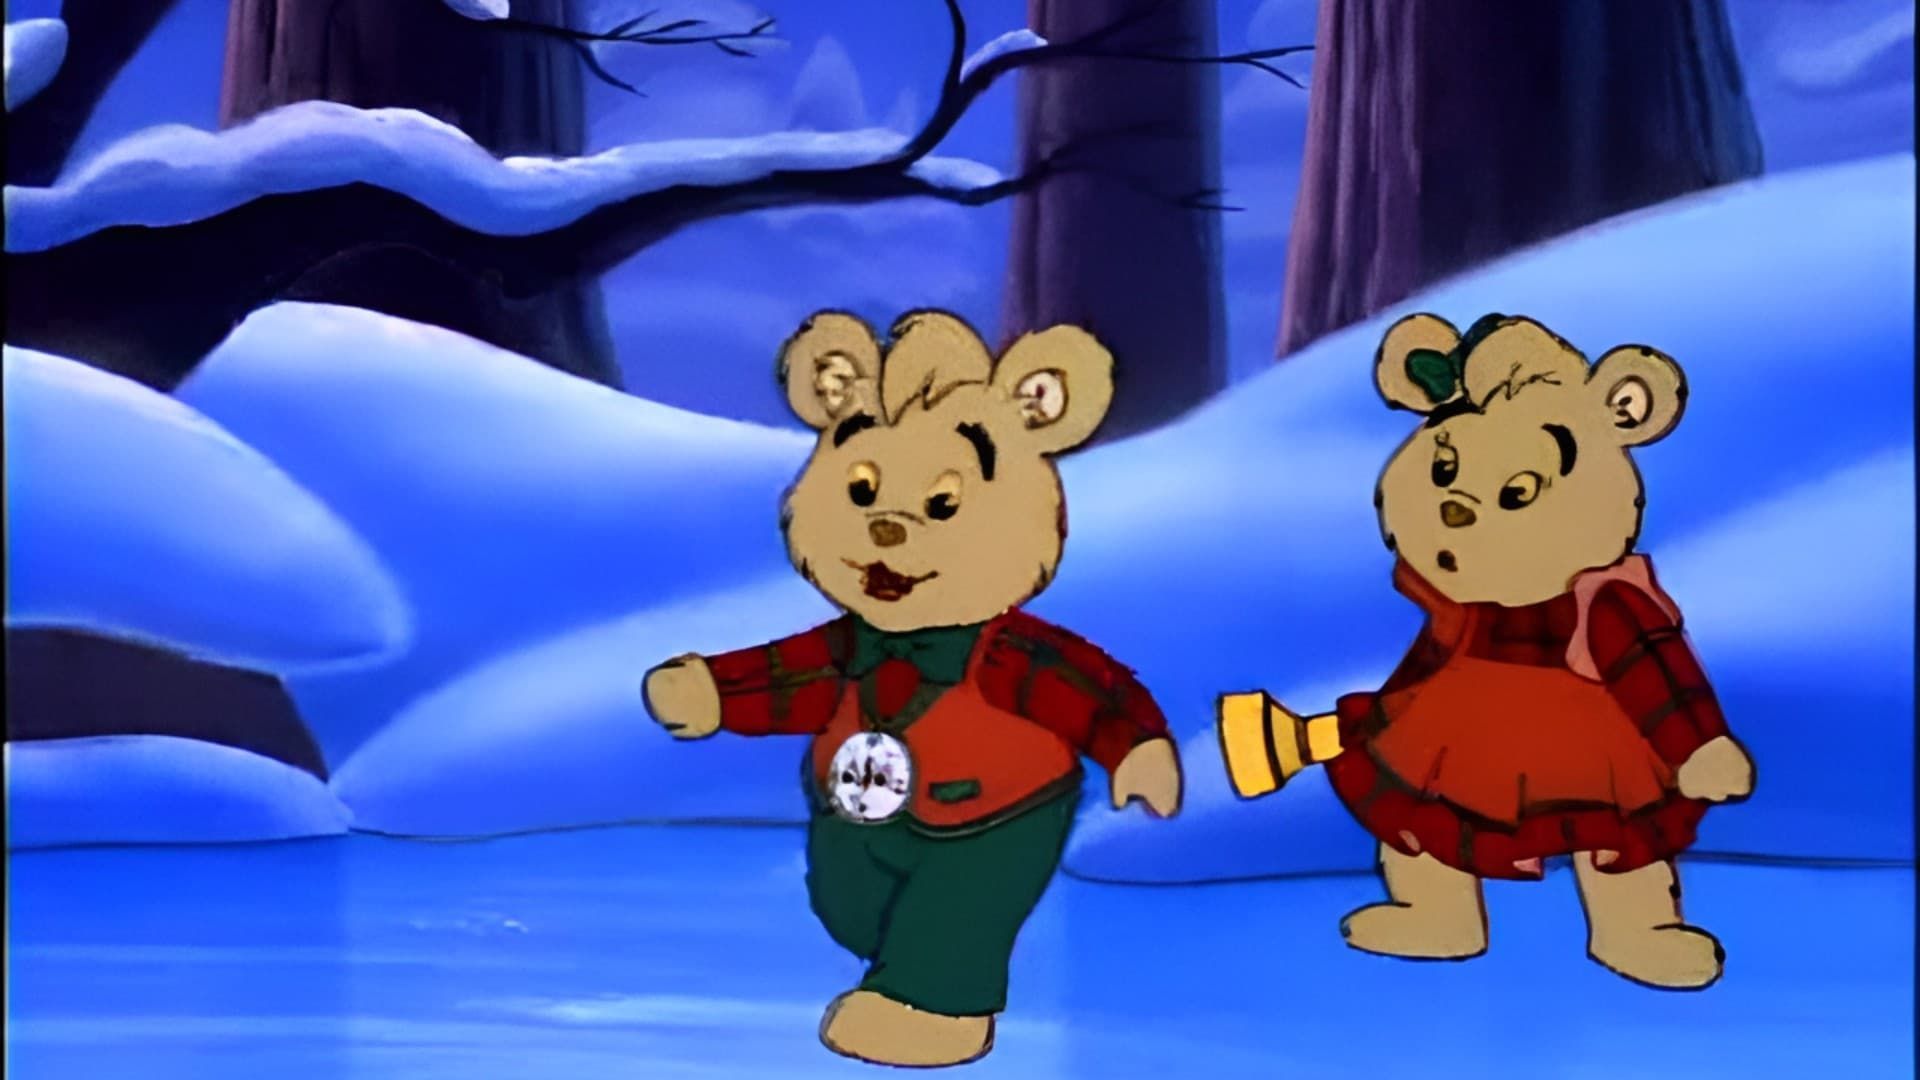 The Bears Who Saved Christmas background